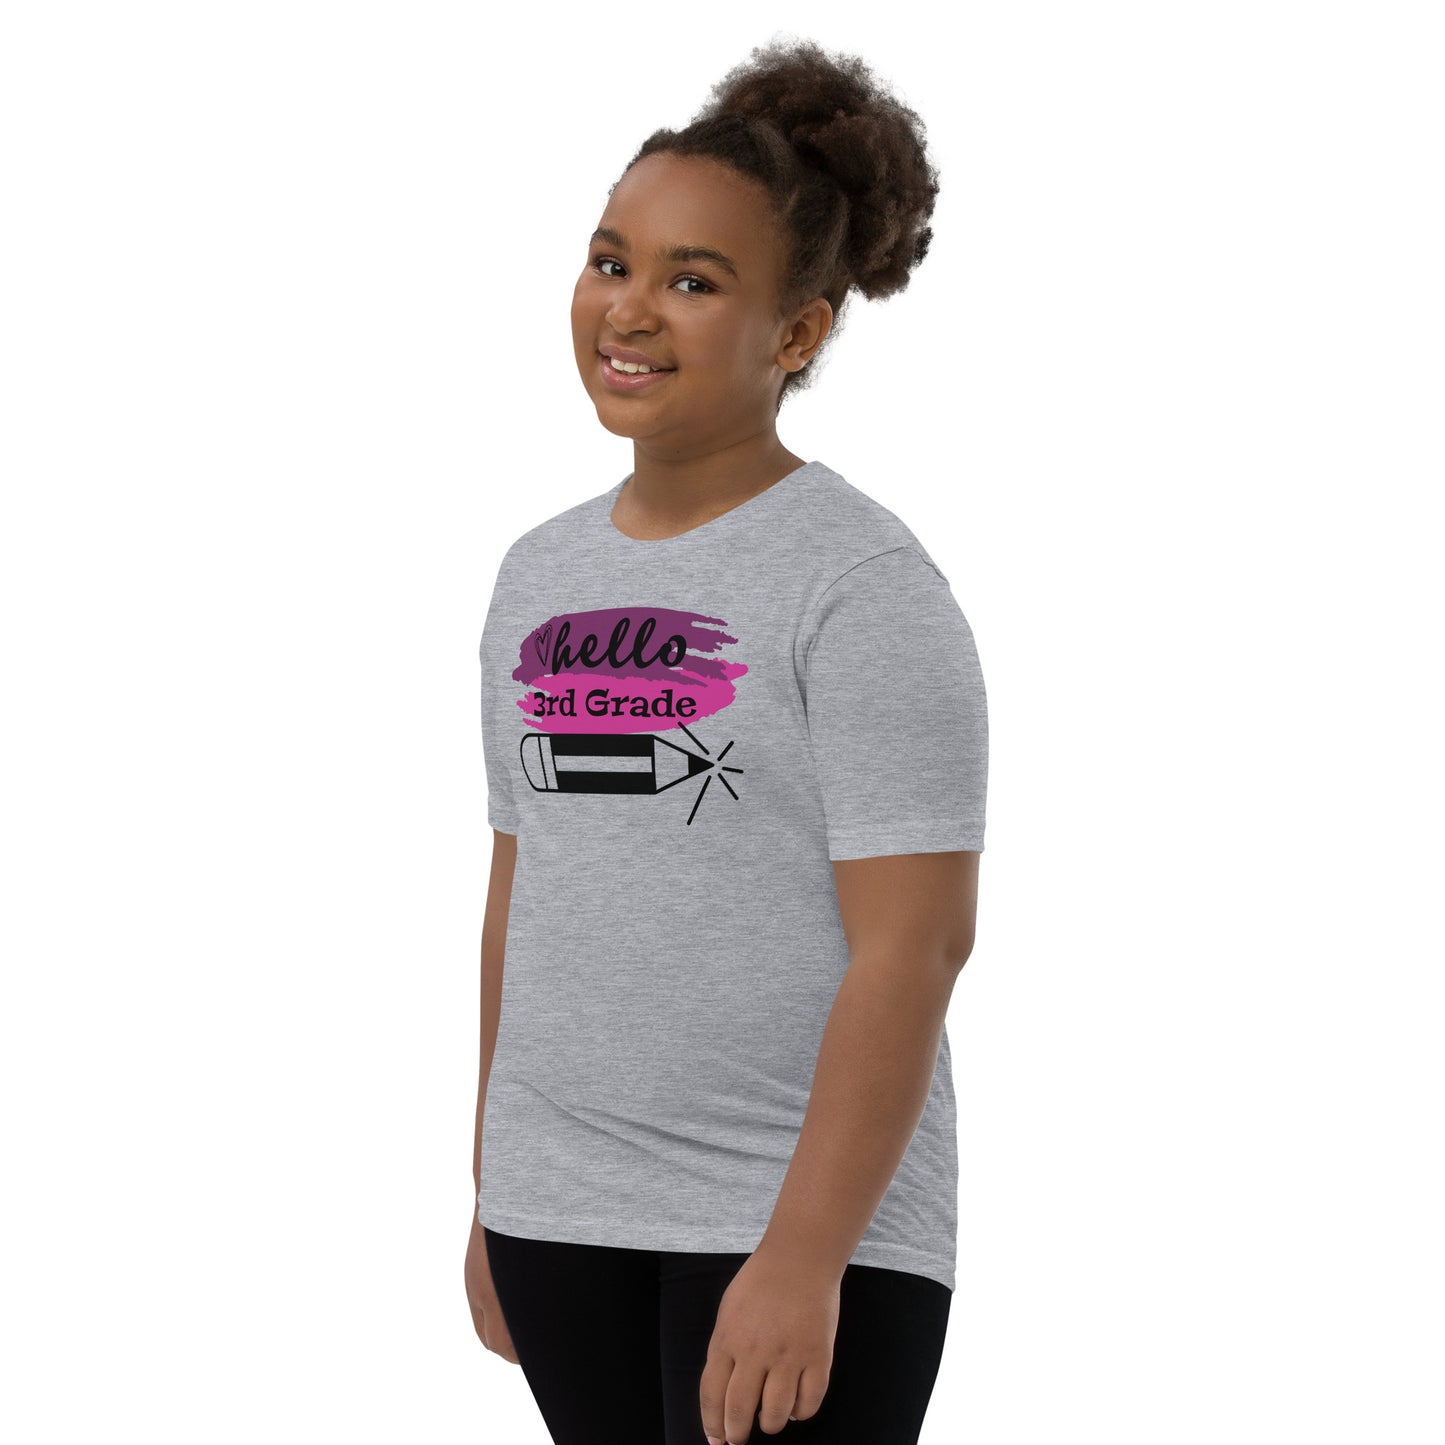 Hello 3rd Grade Pink Youth Short Sleeve T-Shirt